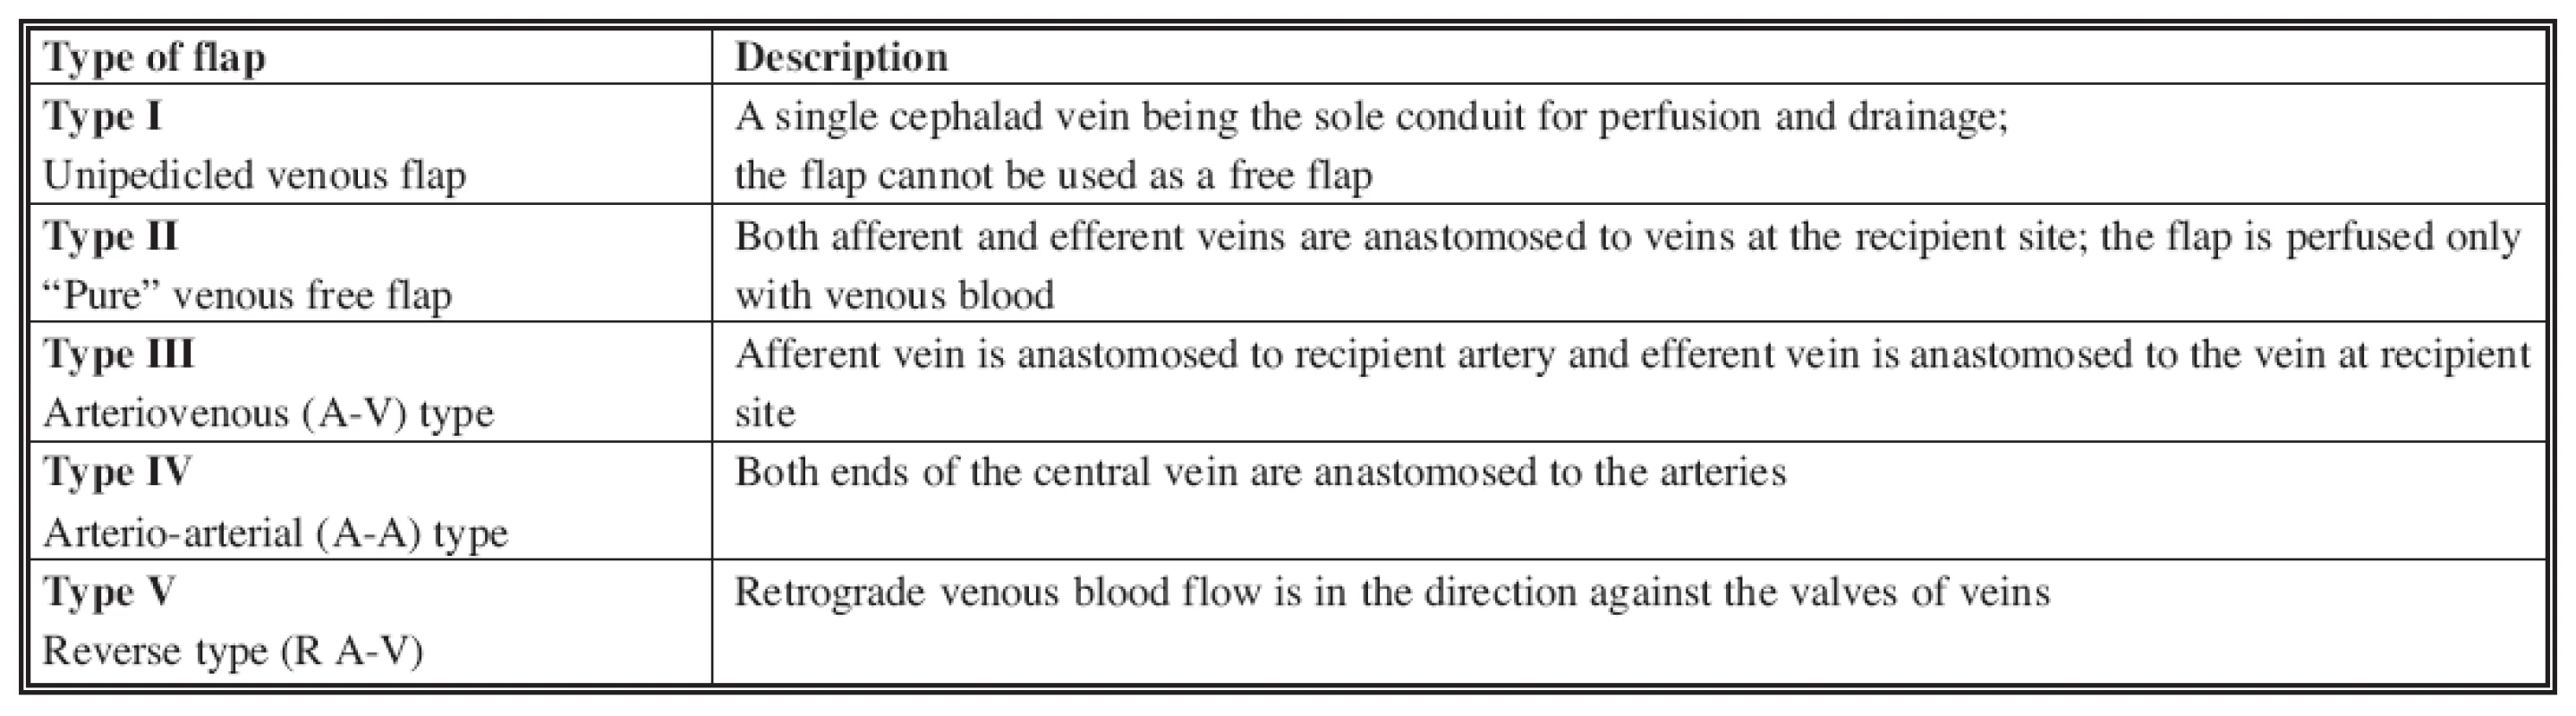 Classification of venous free flaps (8)